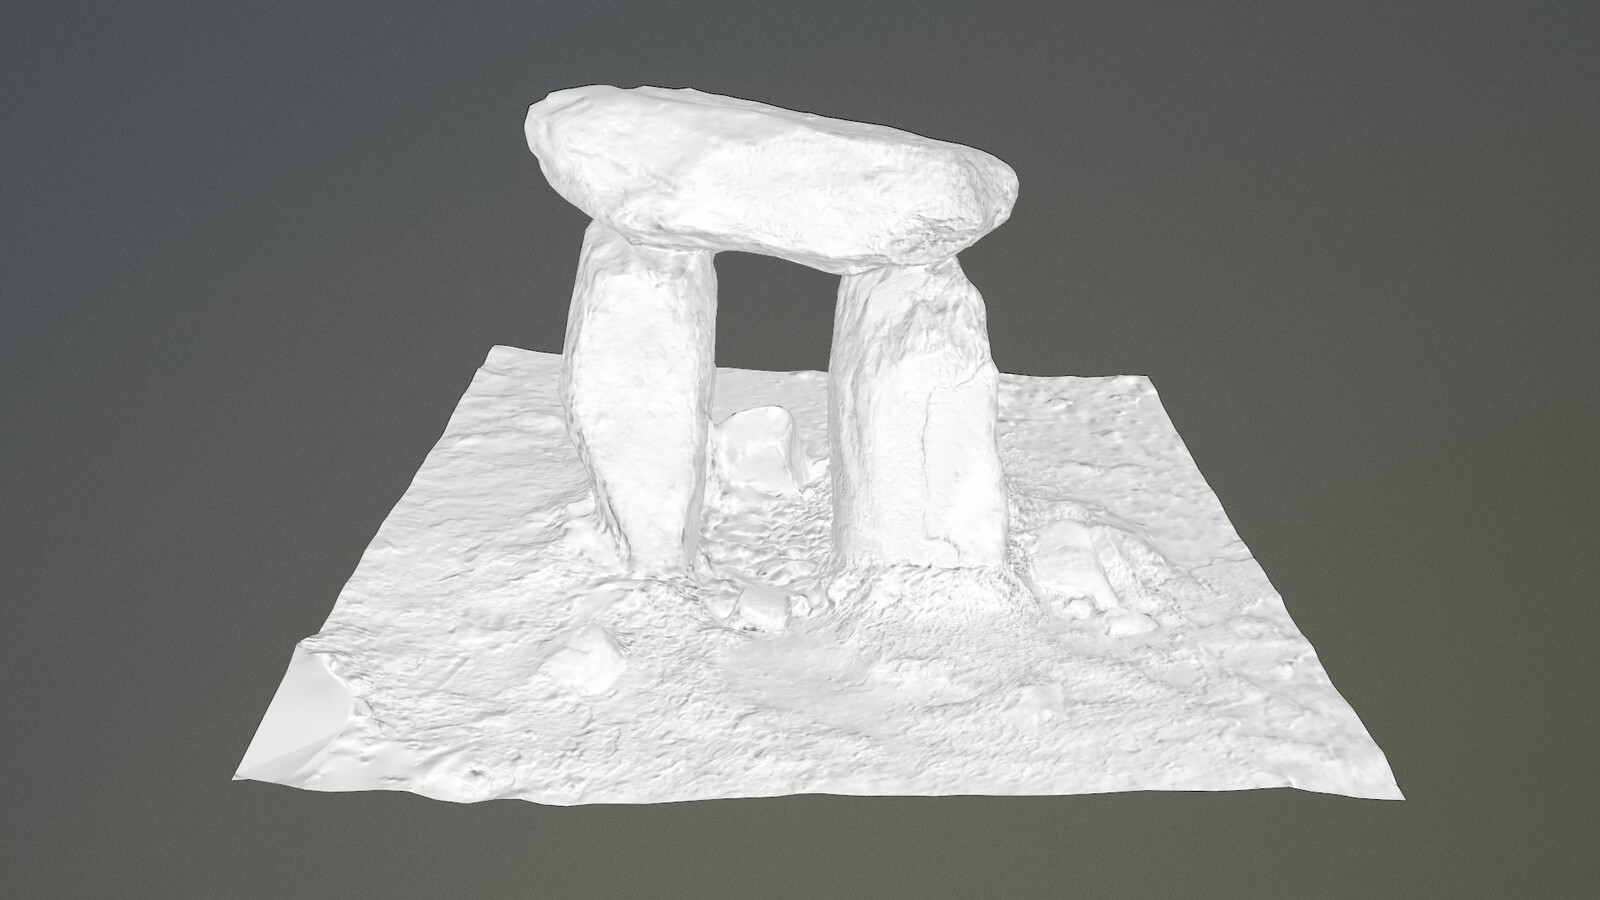 3D model - Mesh surface